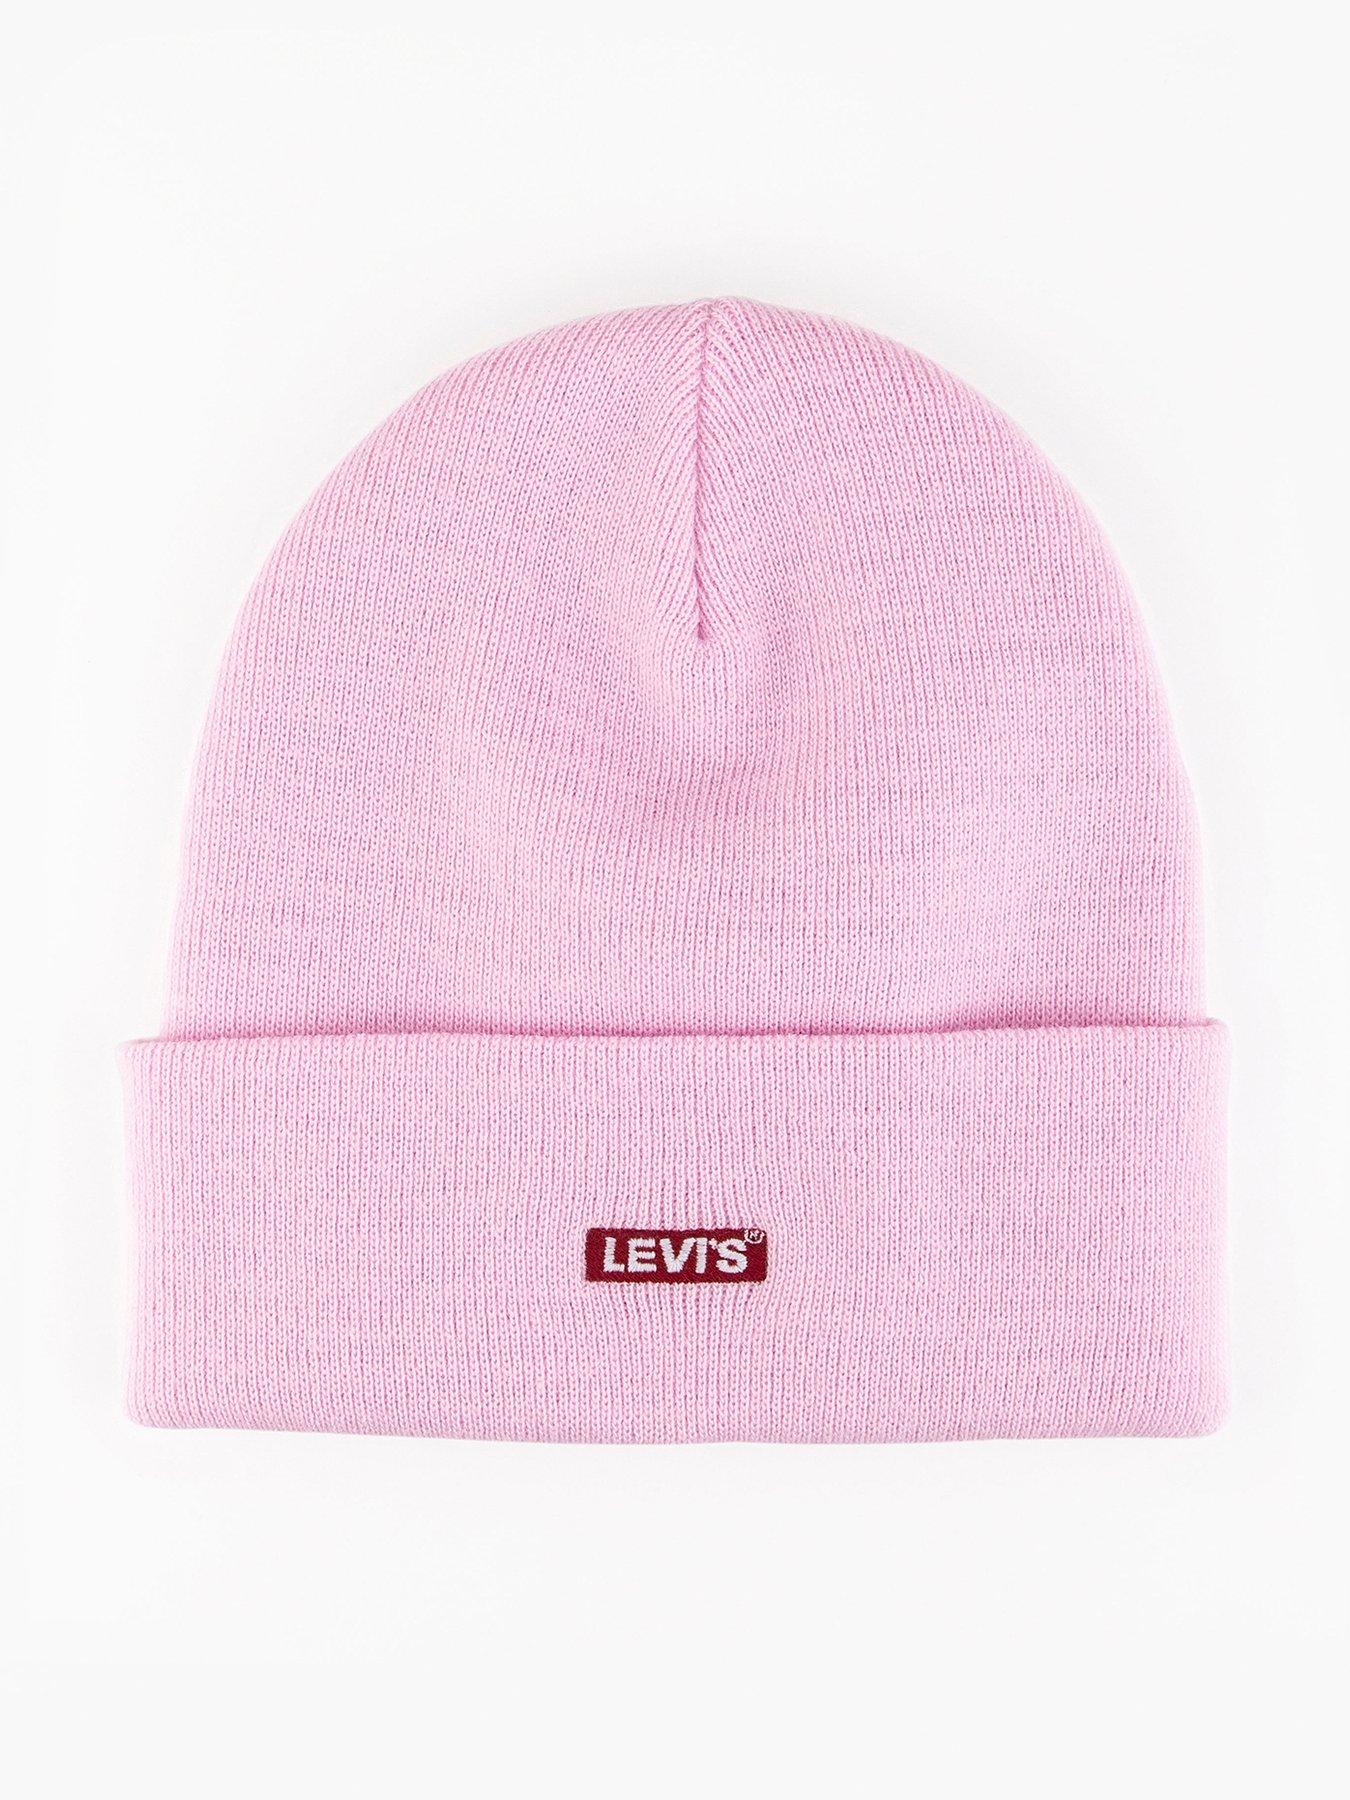 Levi's Baby Tab Logo Beanie - Pink 